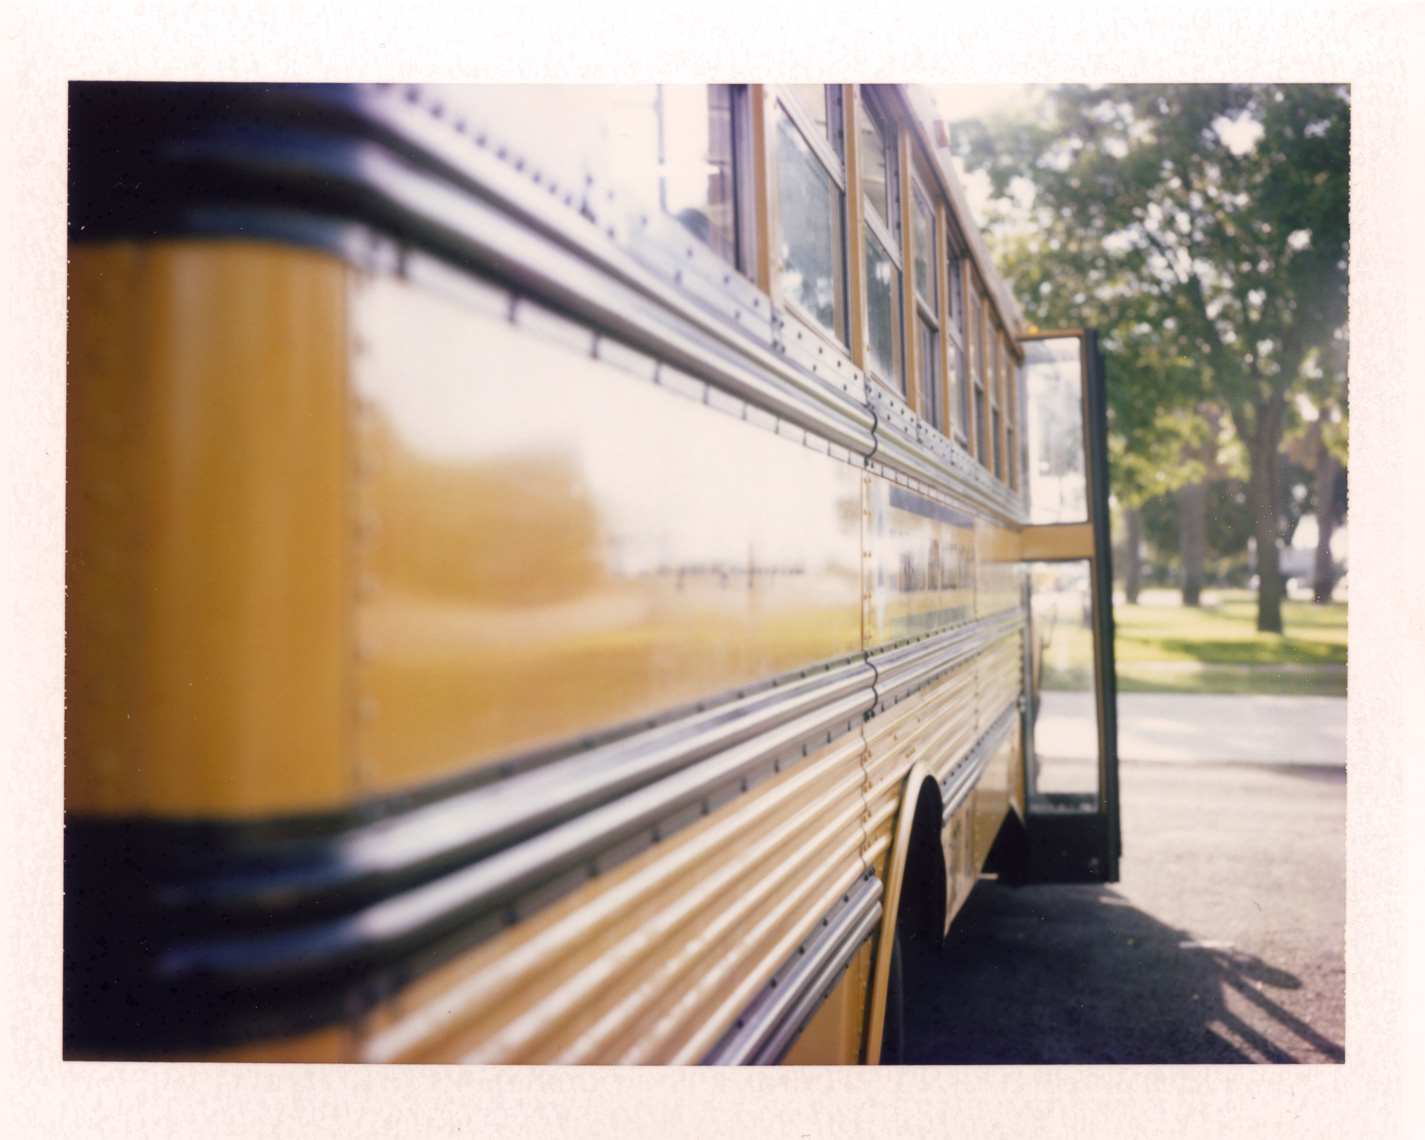 School bus exterior | Photographers who shoot film